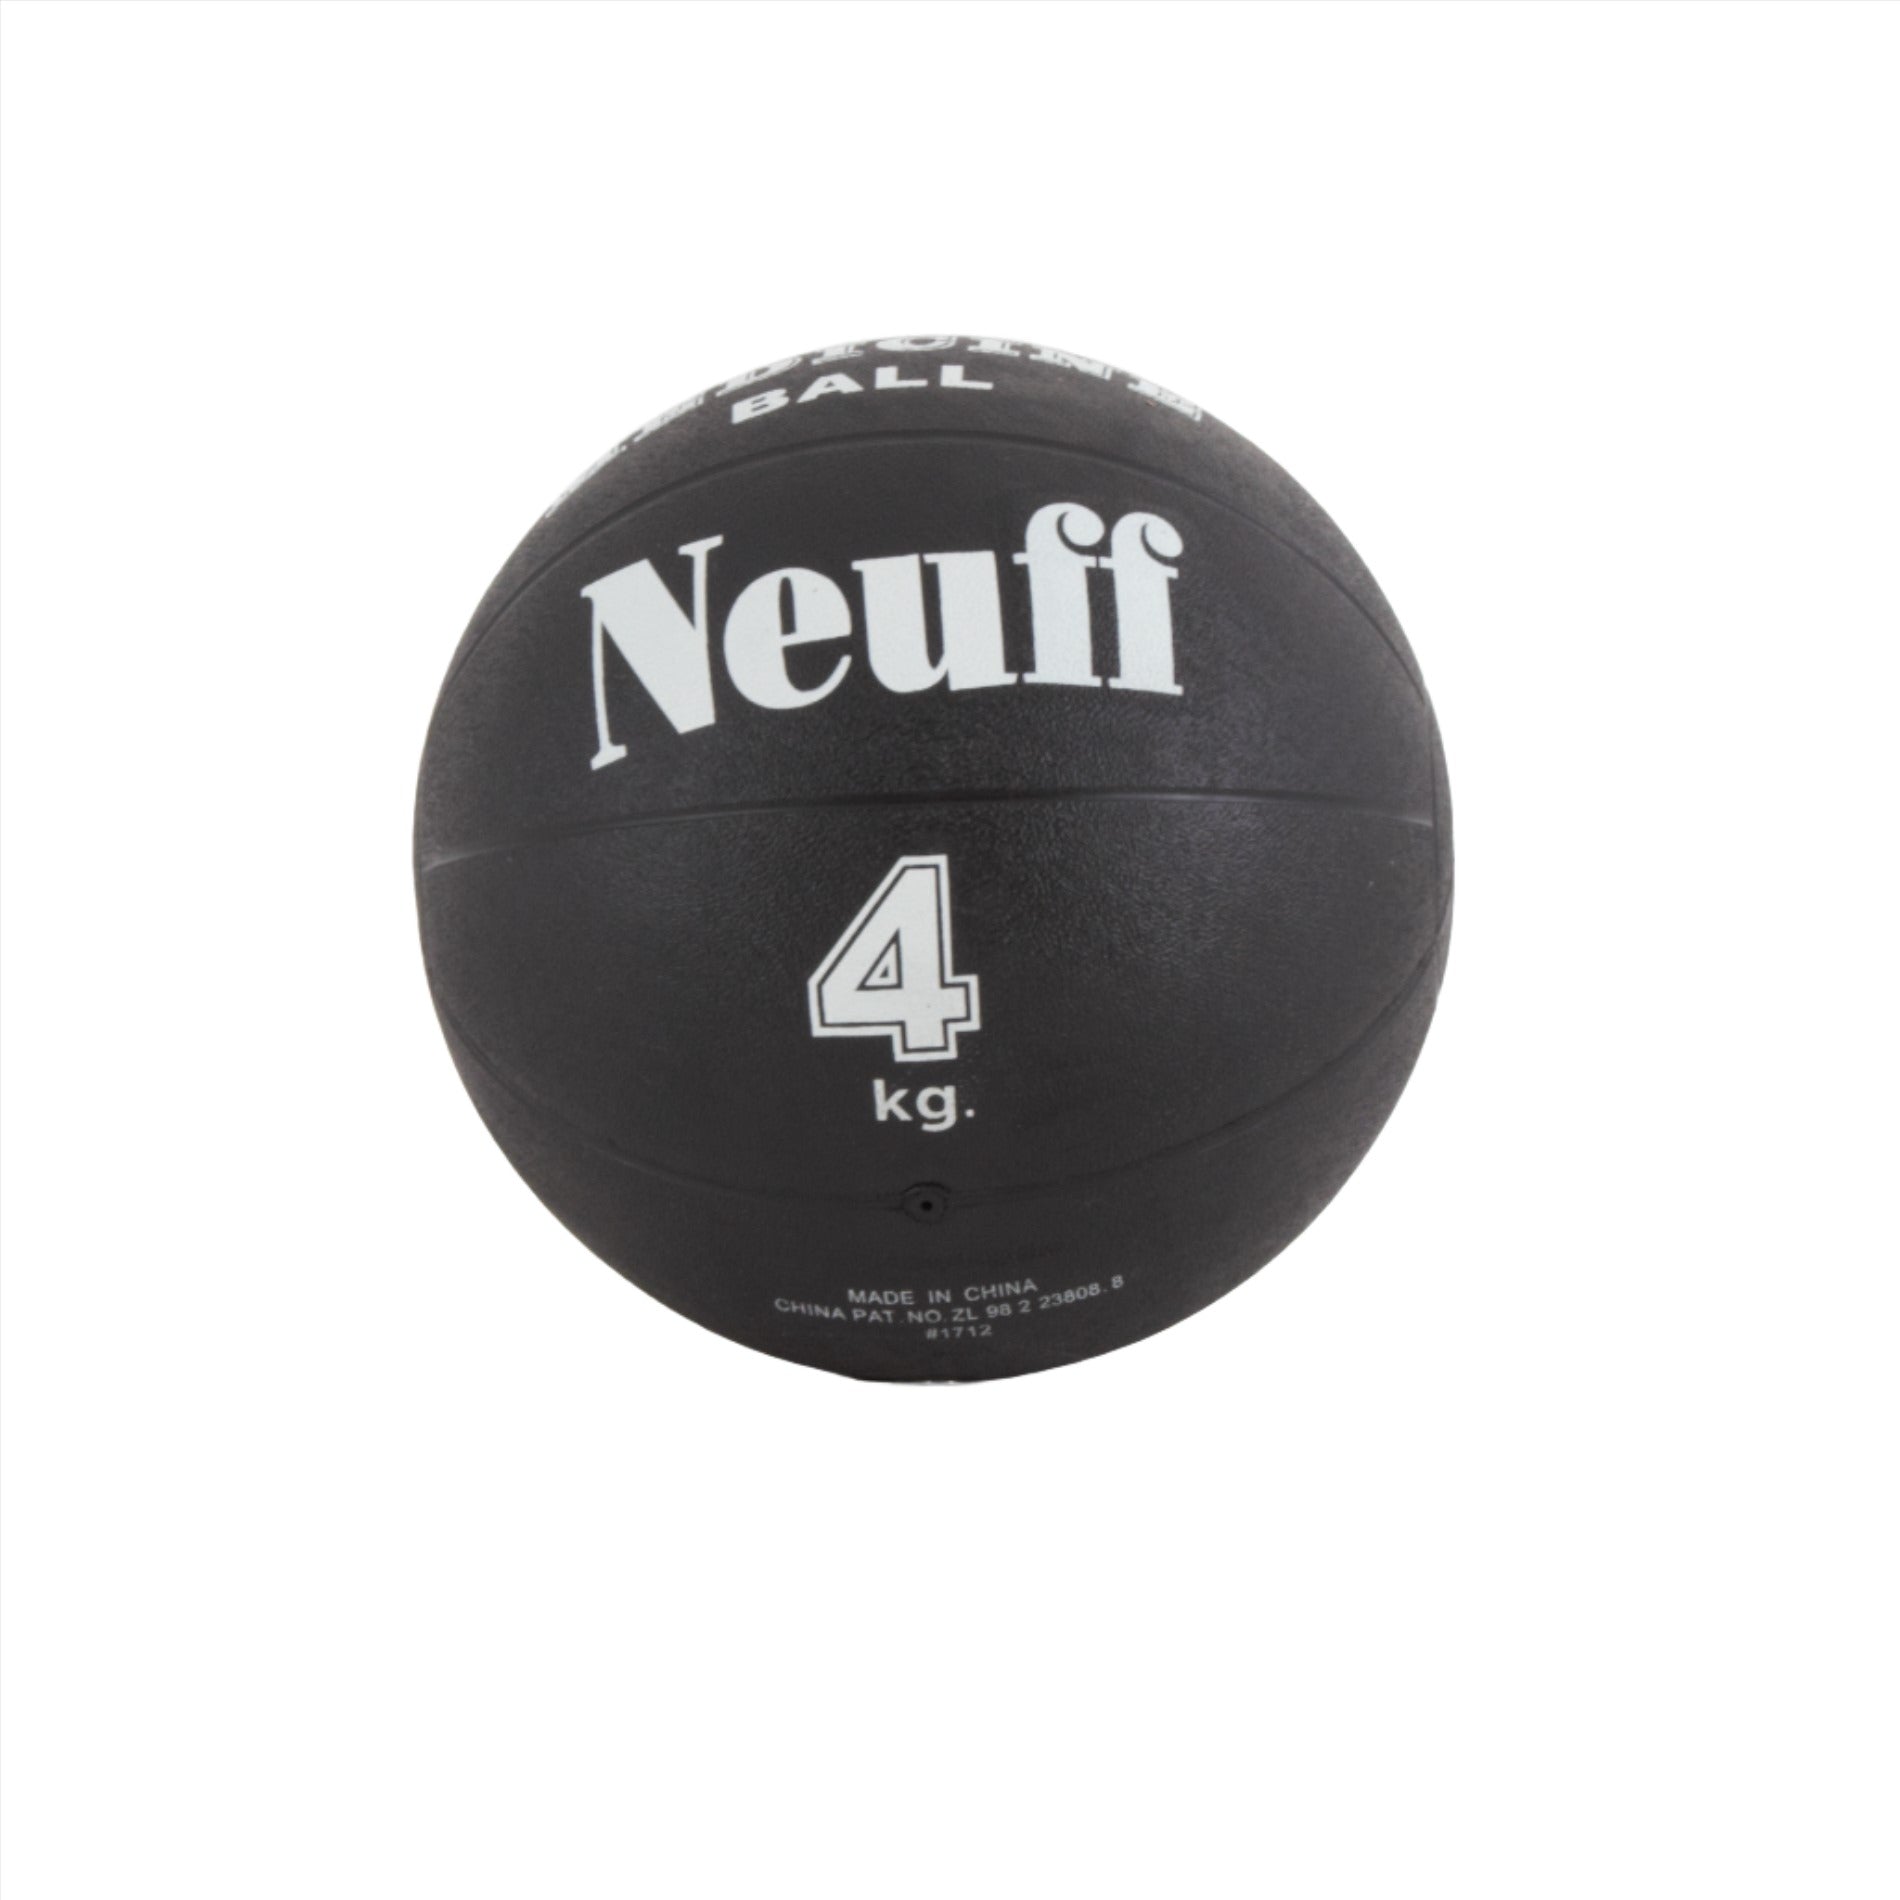 Neuff medicine ball - 4kg